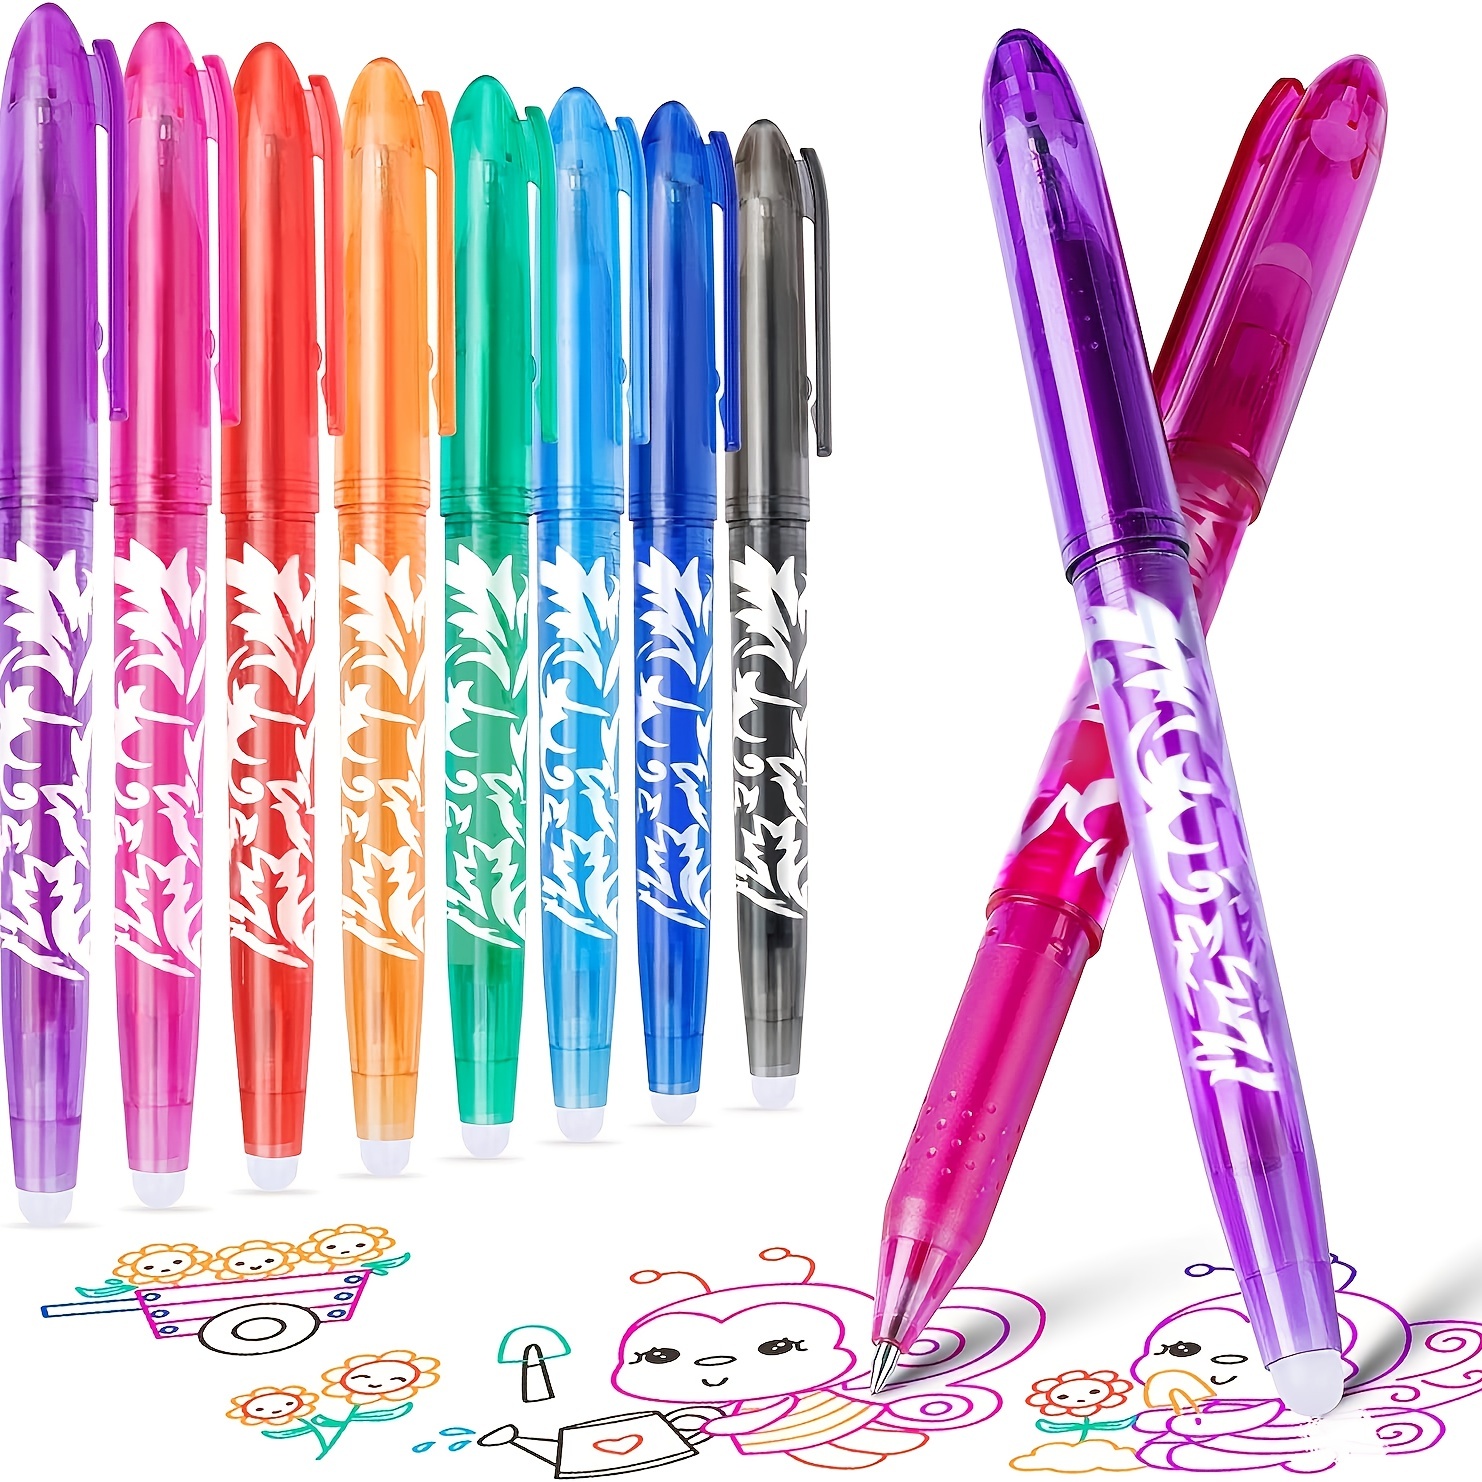 20Pcs/Set Erasable Gel Pen Kawaii Stationery Korean Cute Pens Gift Office  Material School Supplies